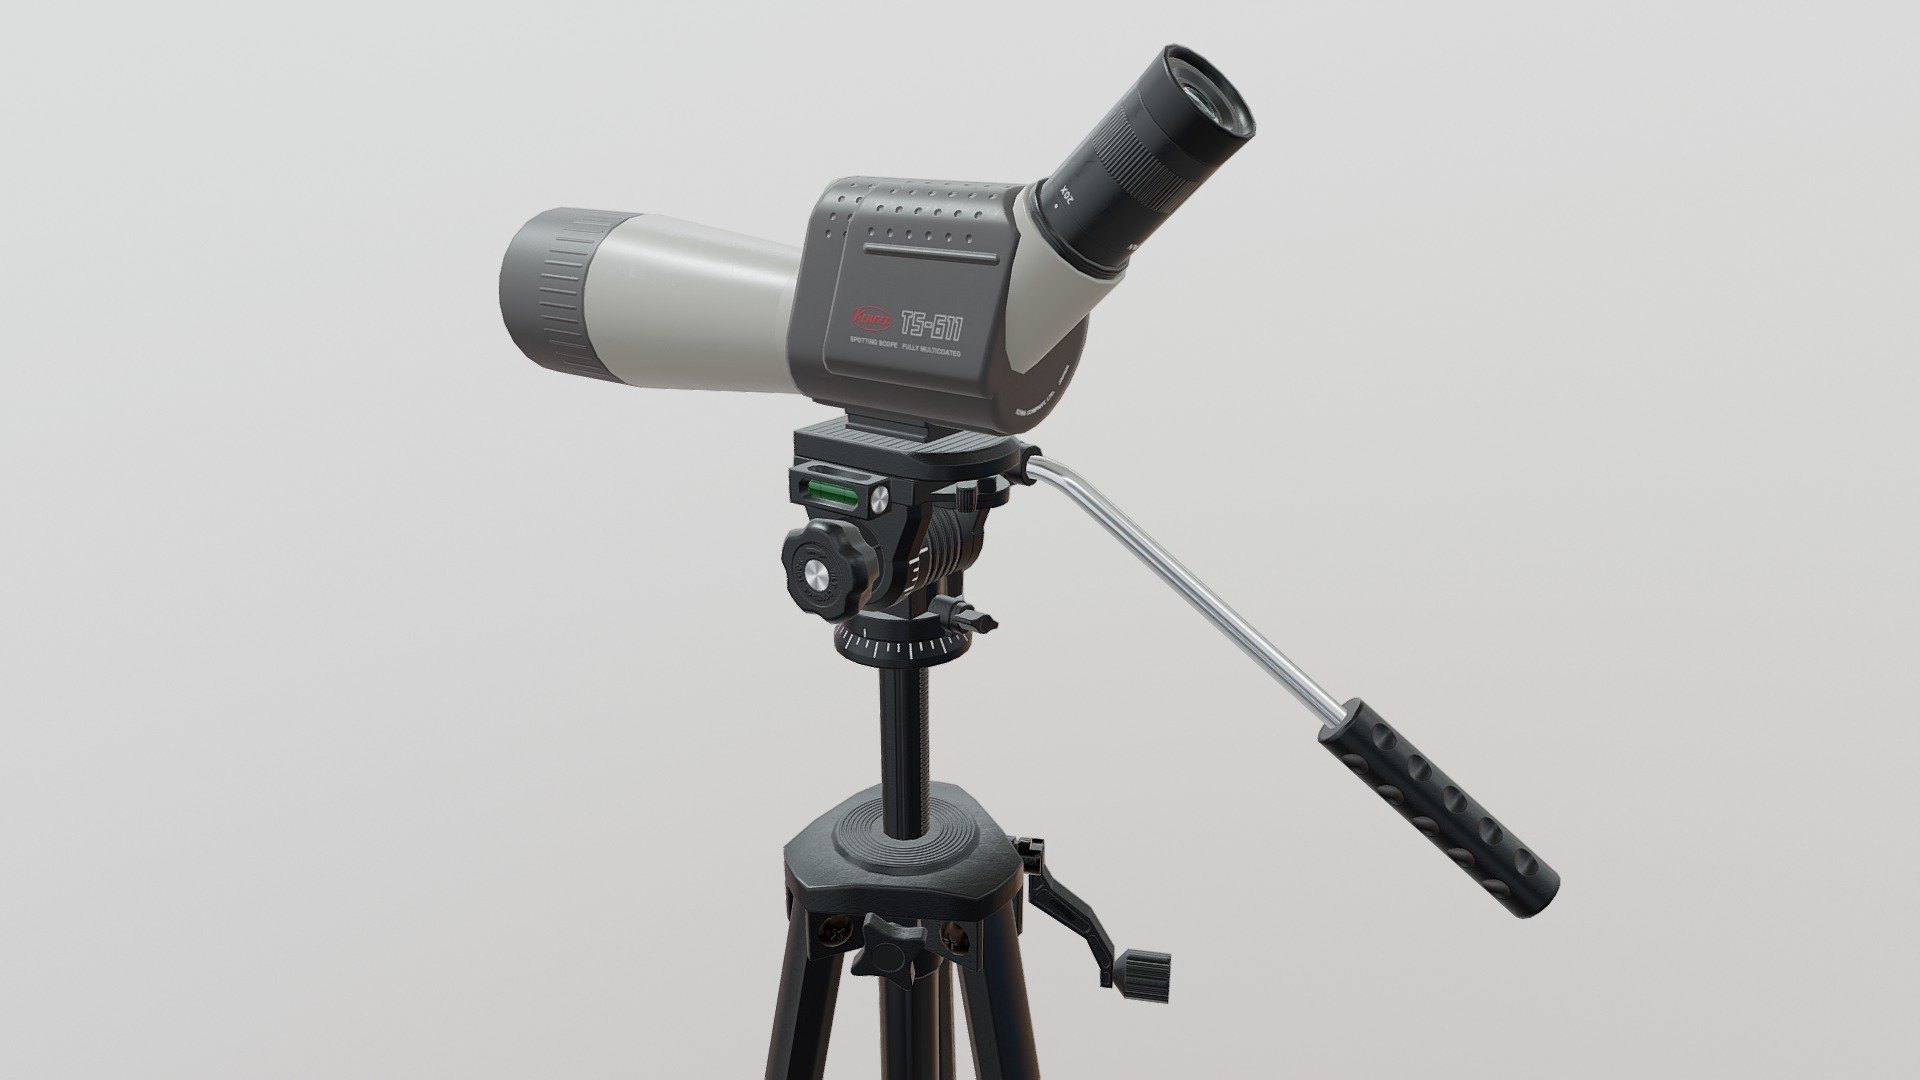 High poly spotting scope. Model TS-611, Kowa company, Japan

Modeled in Blender 3D, textured in Substance Painter 3d model